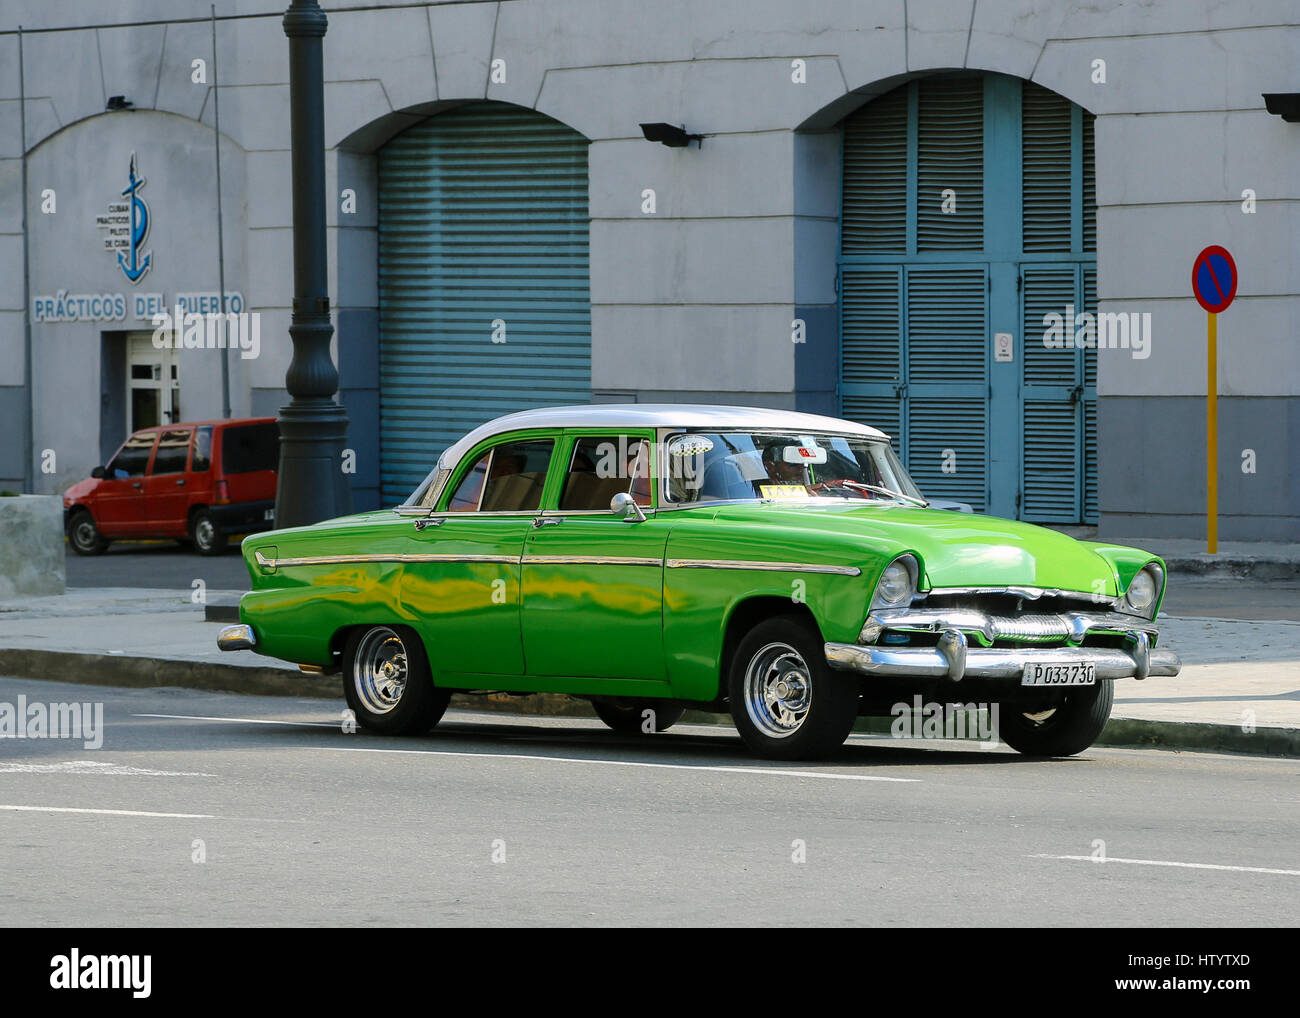 A green American style classic car in Cuba Stock Photo